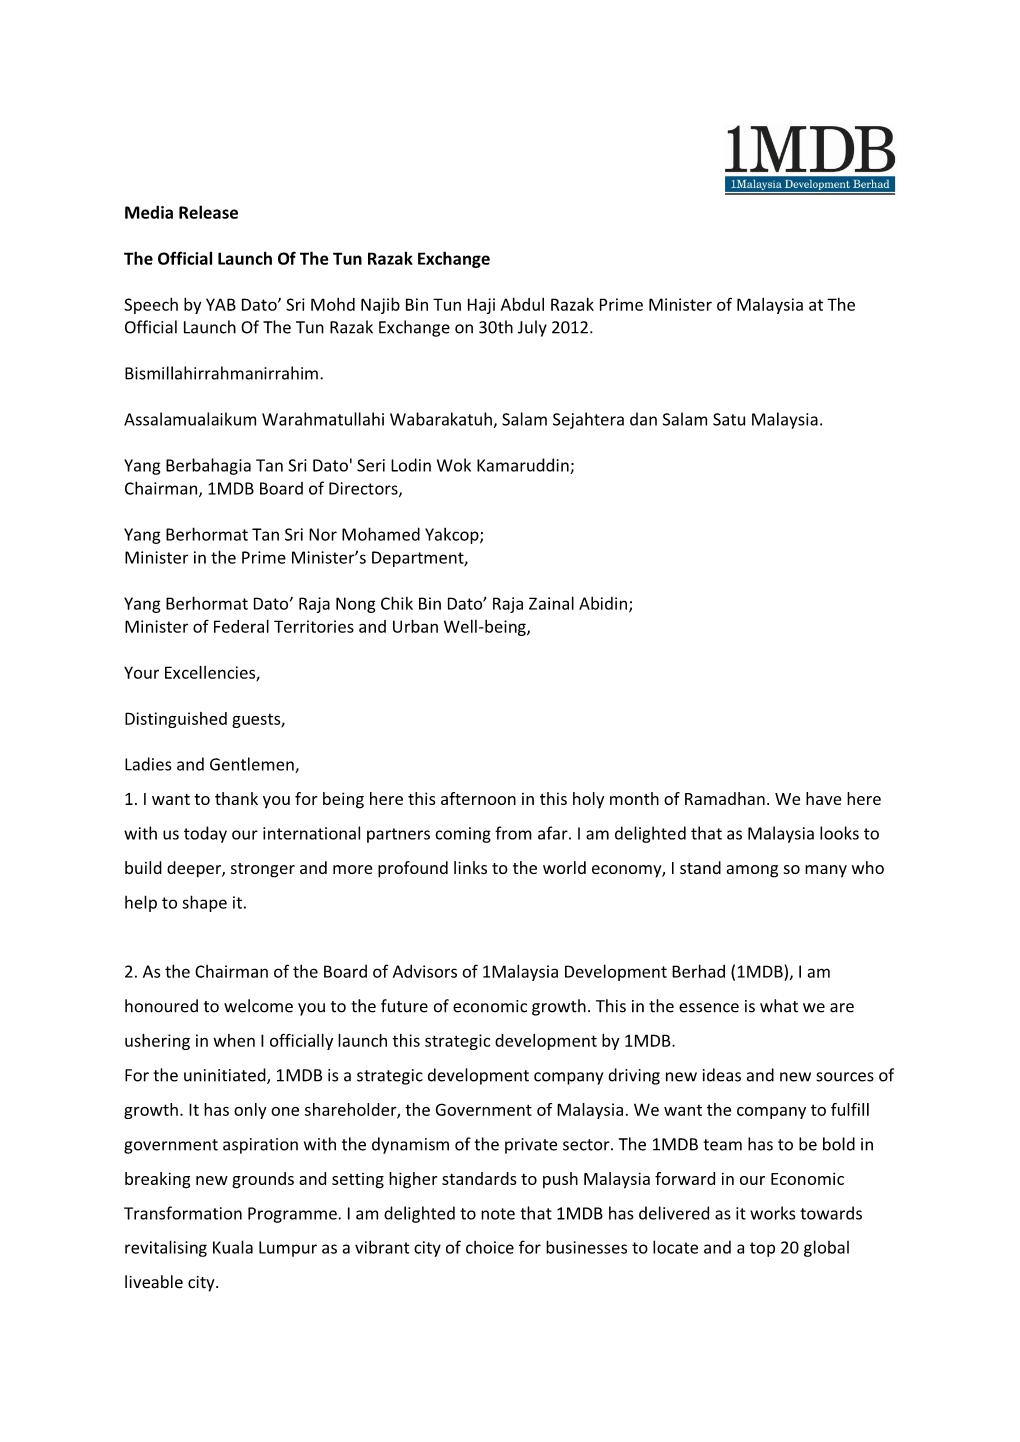 Media Release the Official Launch of the Tun Razak Exchange Speech